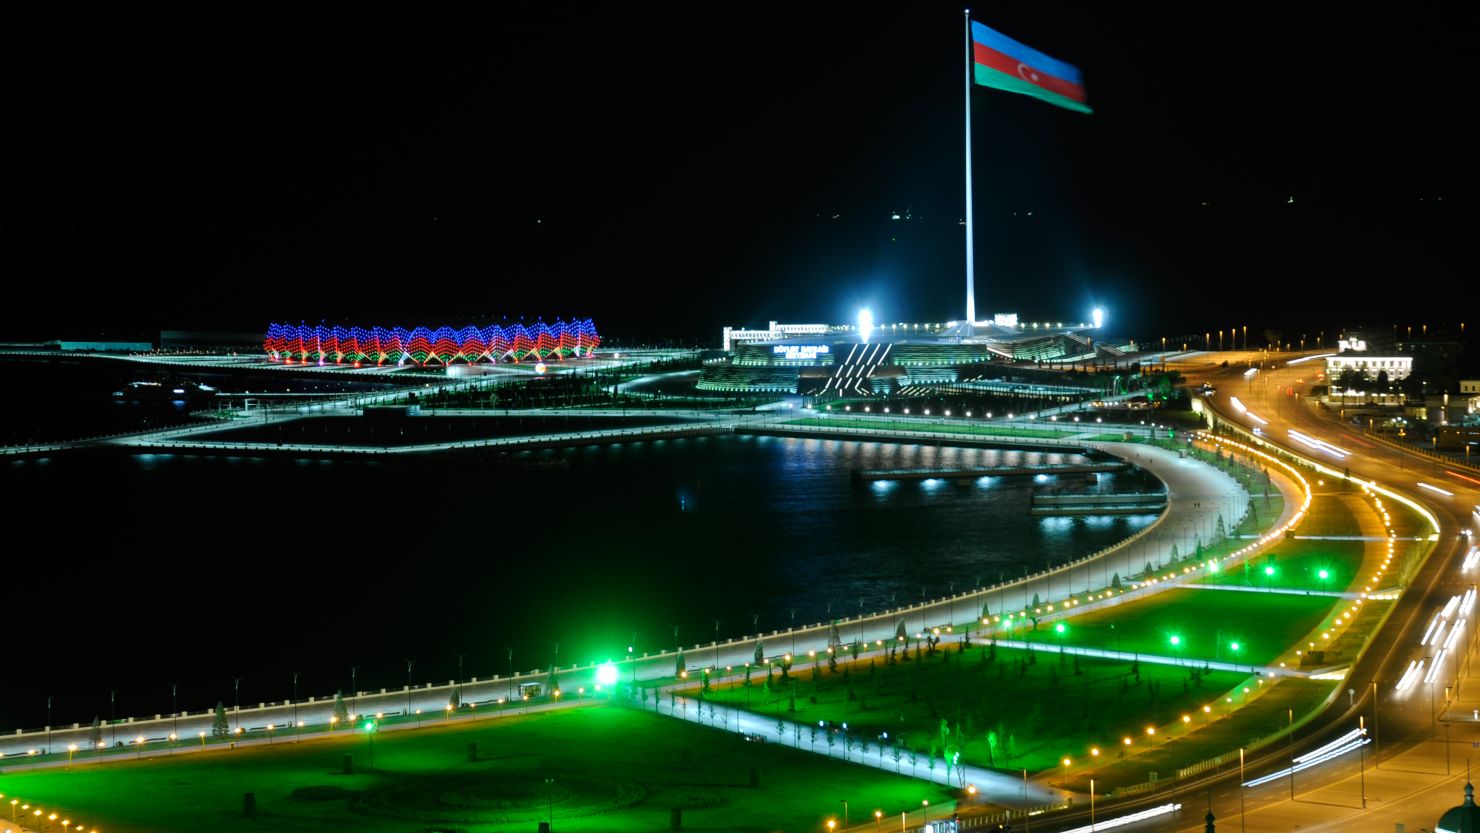 Azerbaijan's capital city Baku will welcome Formula One's traveling circus in 2016.